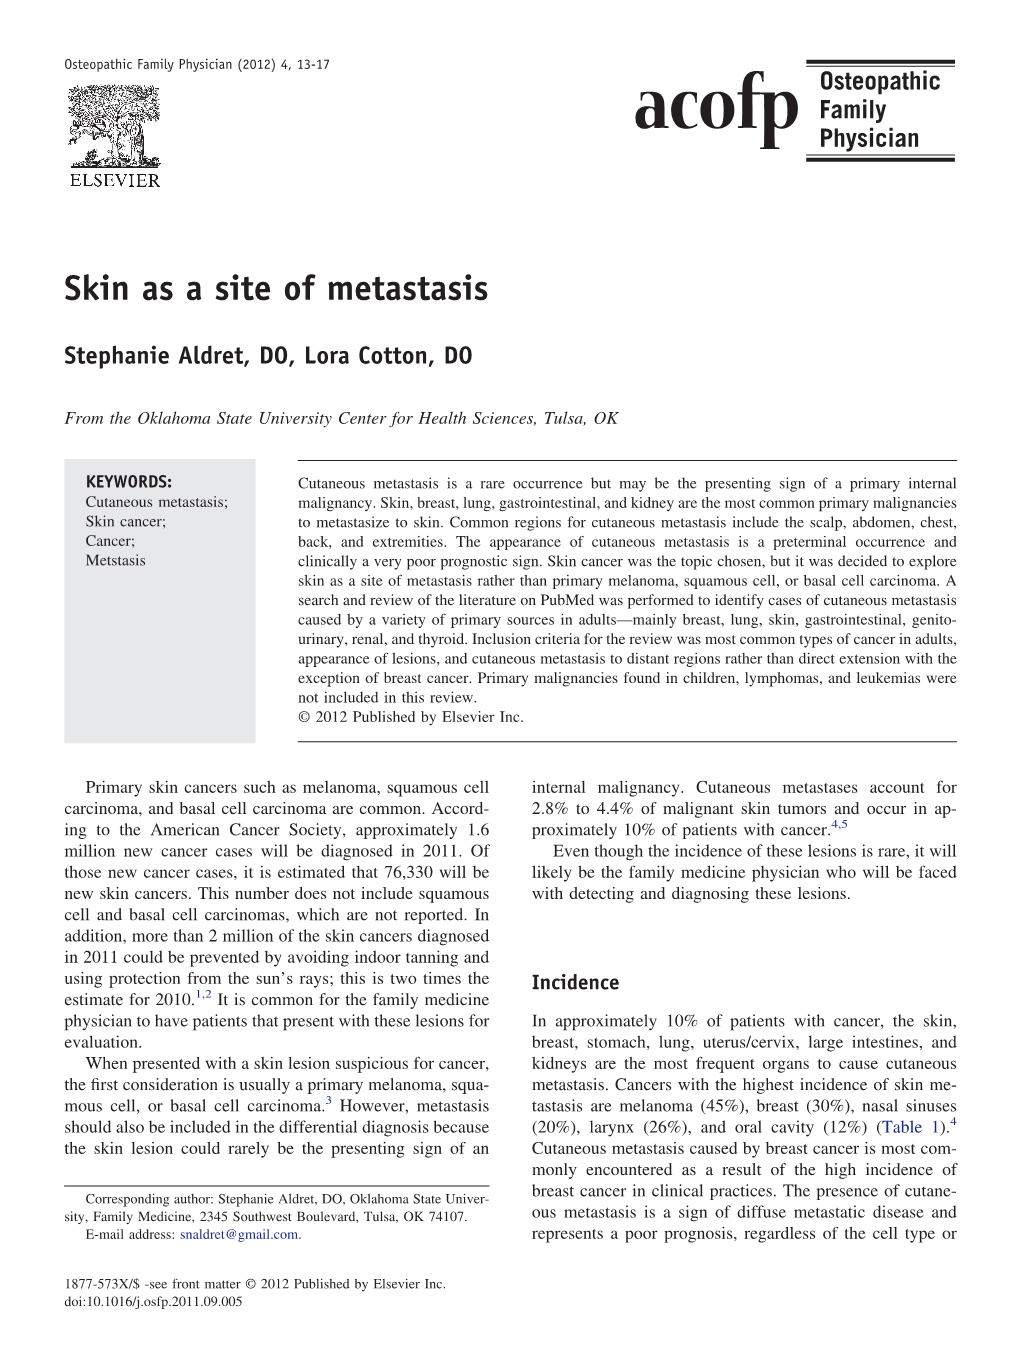 Skin As a Site of Metastasis